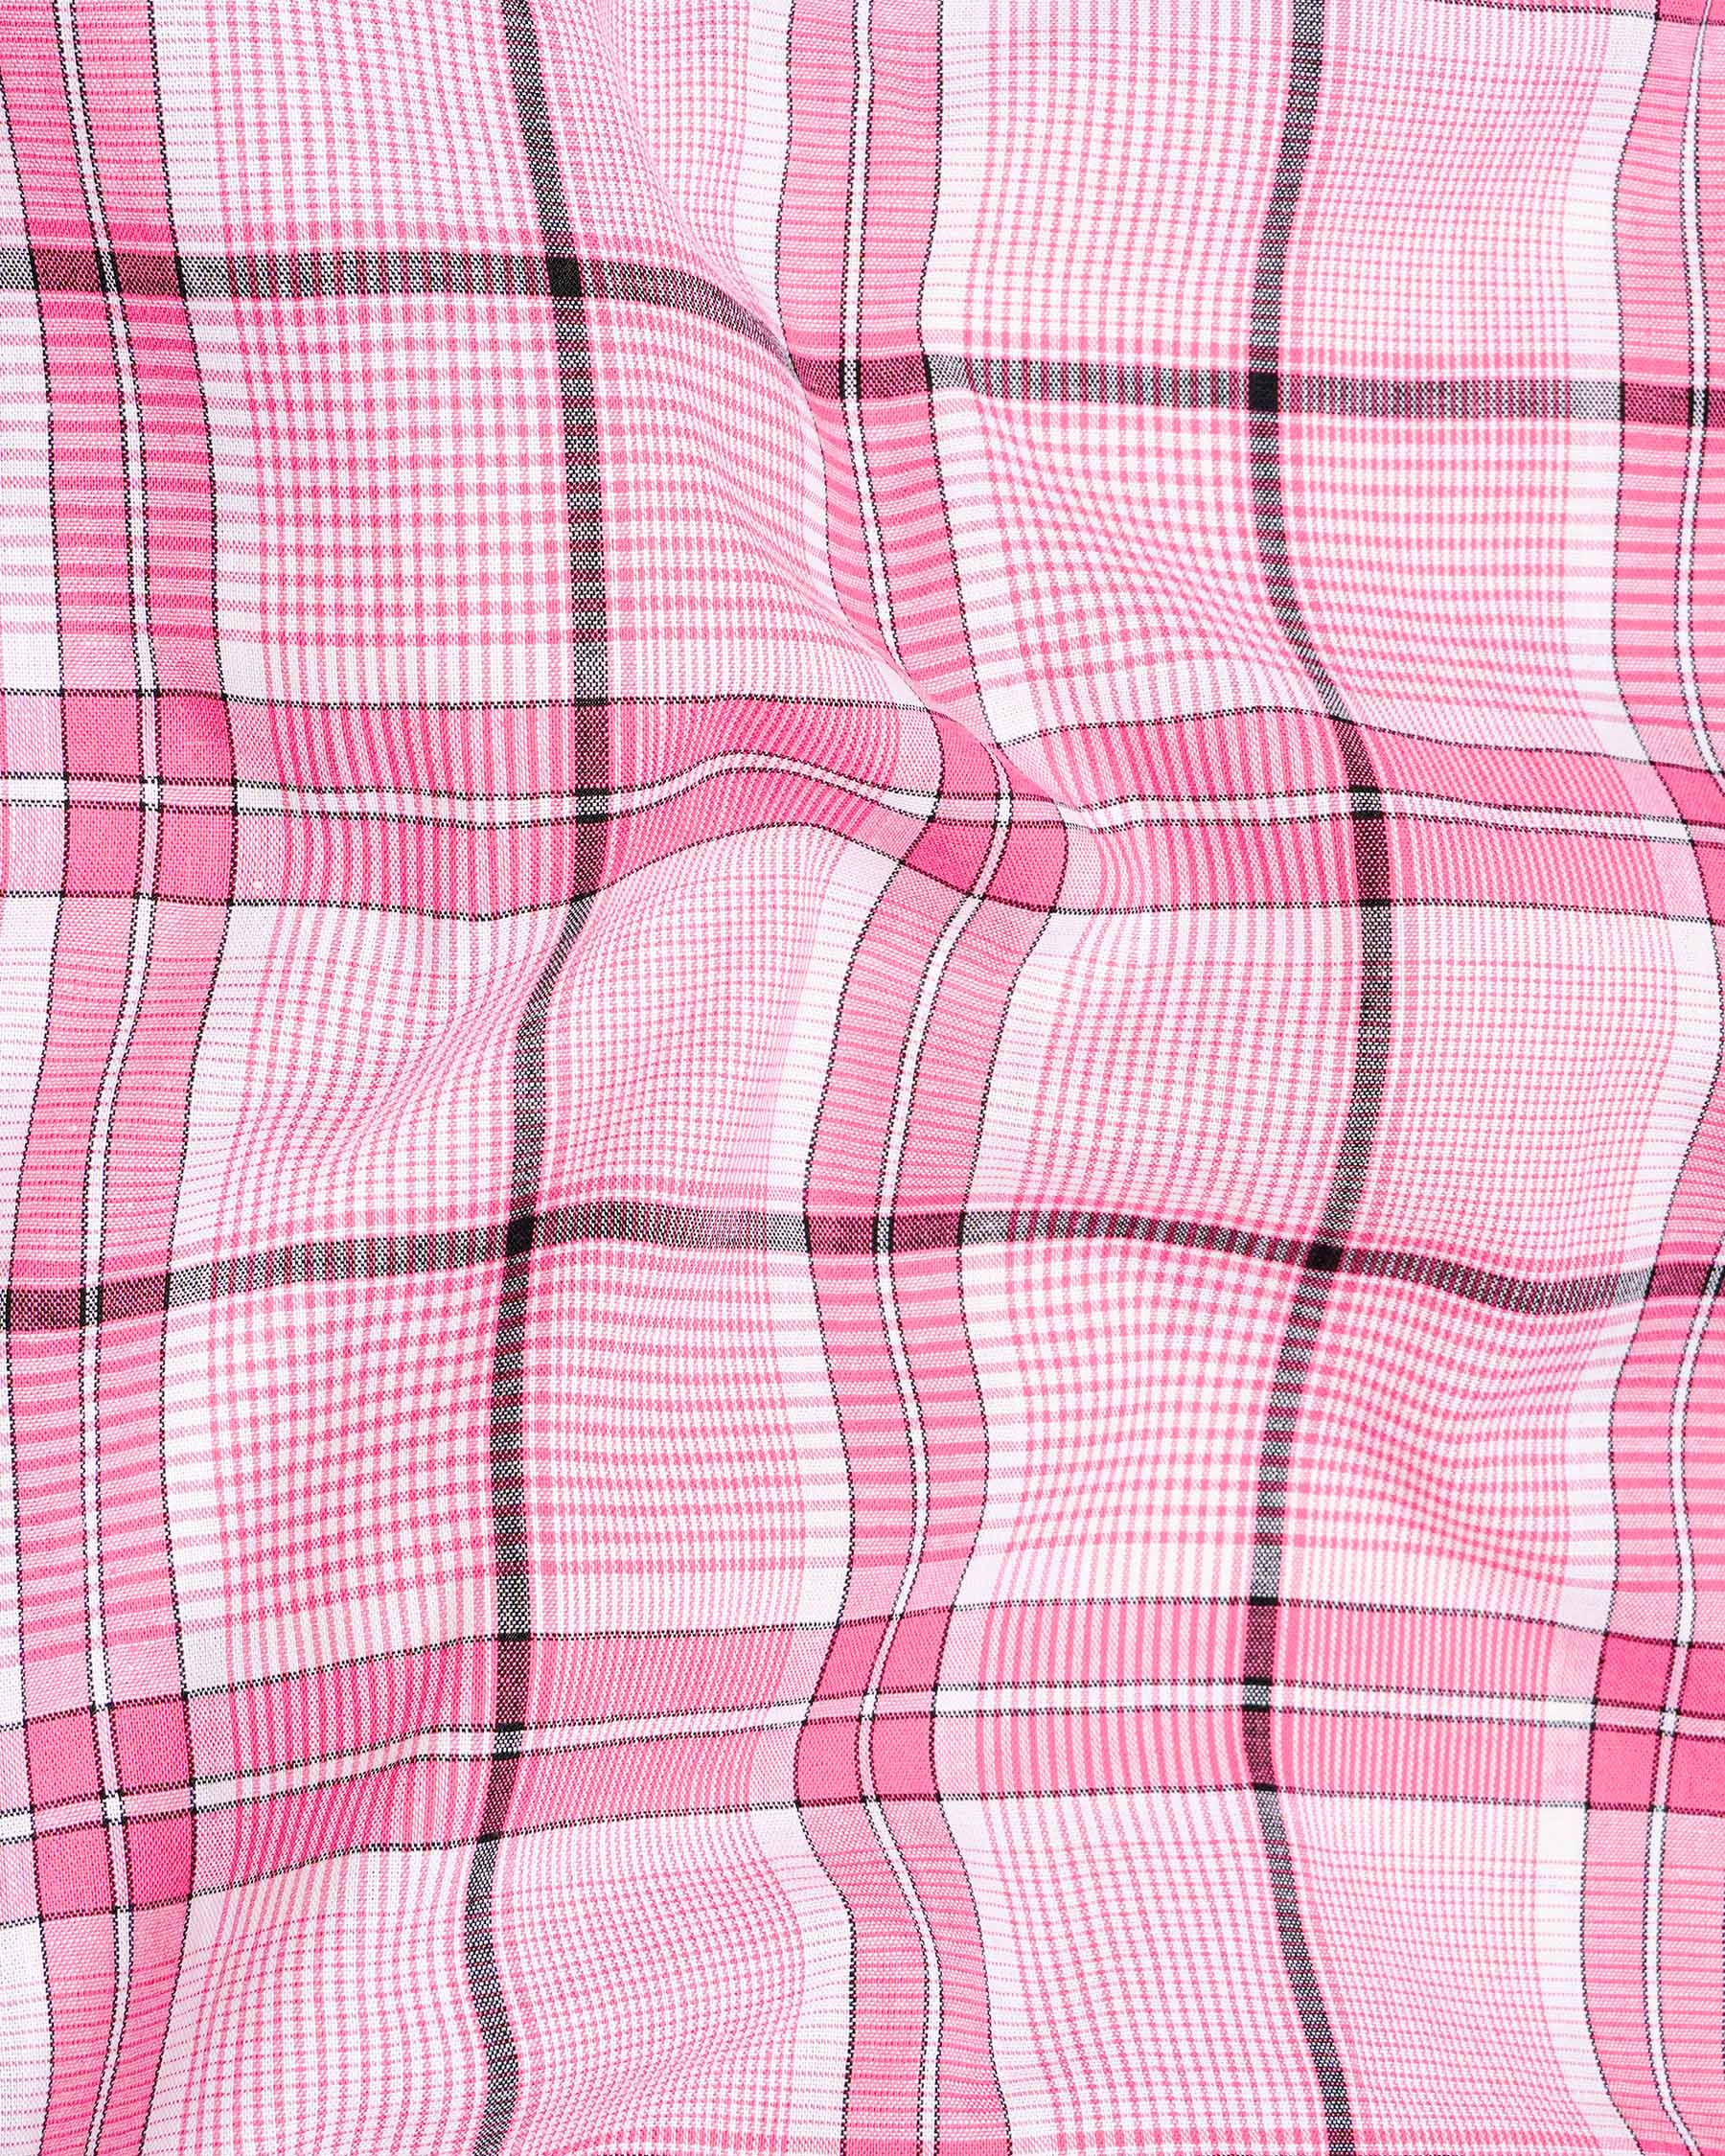 Deep Blush Pink Plaid Premium Cotton Shirt 7246-BLK-38, 7246-BLK-H-38, 7246-BLK-39, 7246-BLK-H-39, 7246-BLK-40, 7246-BLK-H-40, 7246-BLK-42, 7246-BLK-H-42, 7246-BLK-44, 7246-BLK-H-44, 7246-BLK-46, 7246-BLK-H-46, 7246-BLK-48, 7246-BLK-H-48, 7246-BLK-50, 7246-BLK-H-50, 7246-BLK-52, 7246-BLK-H-52